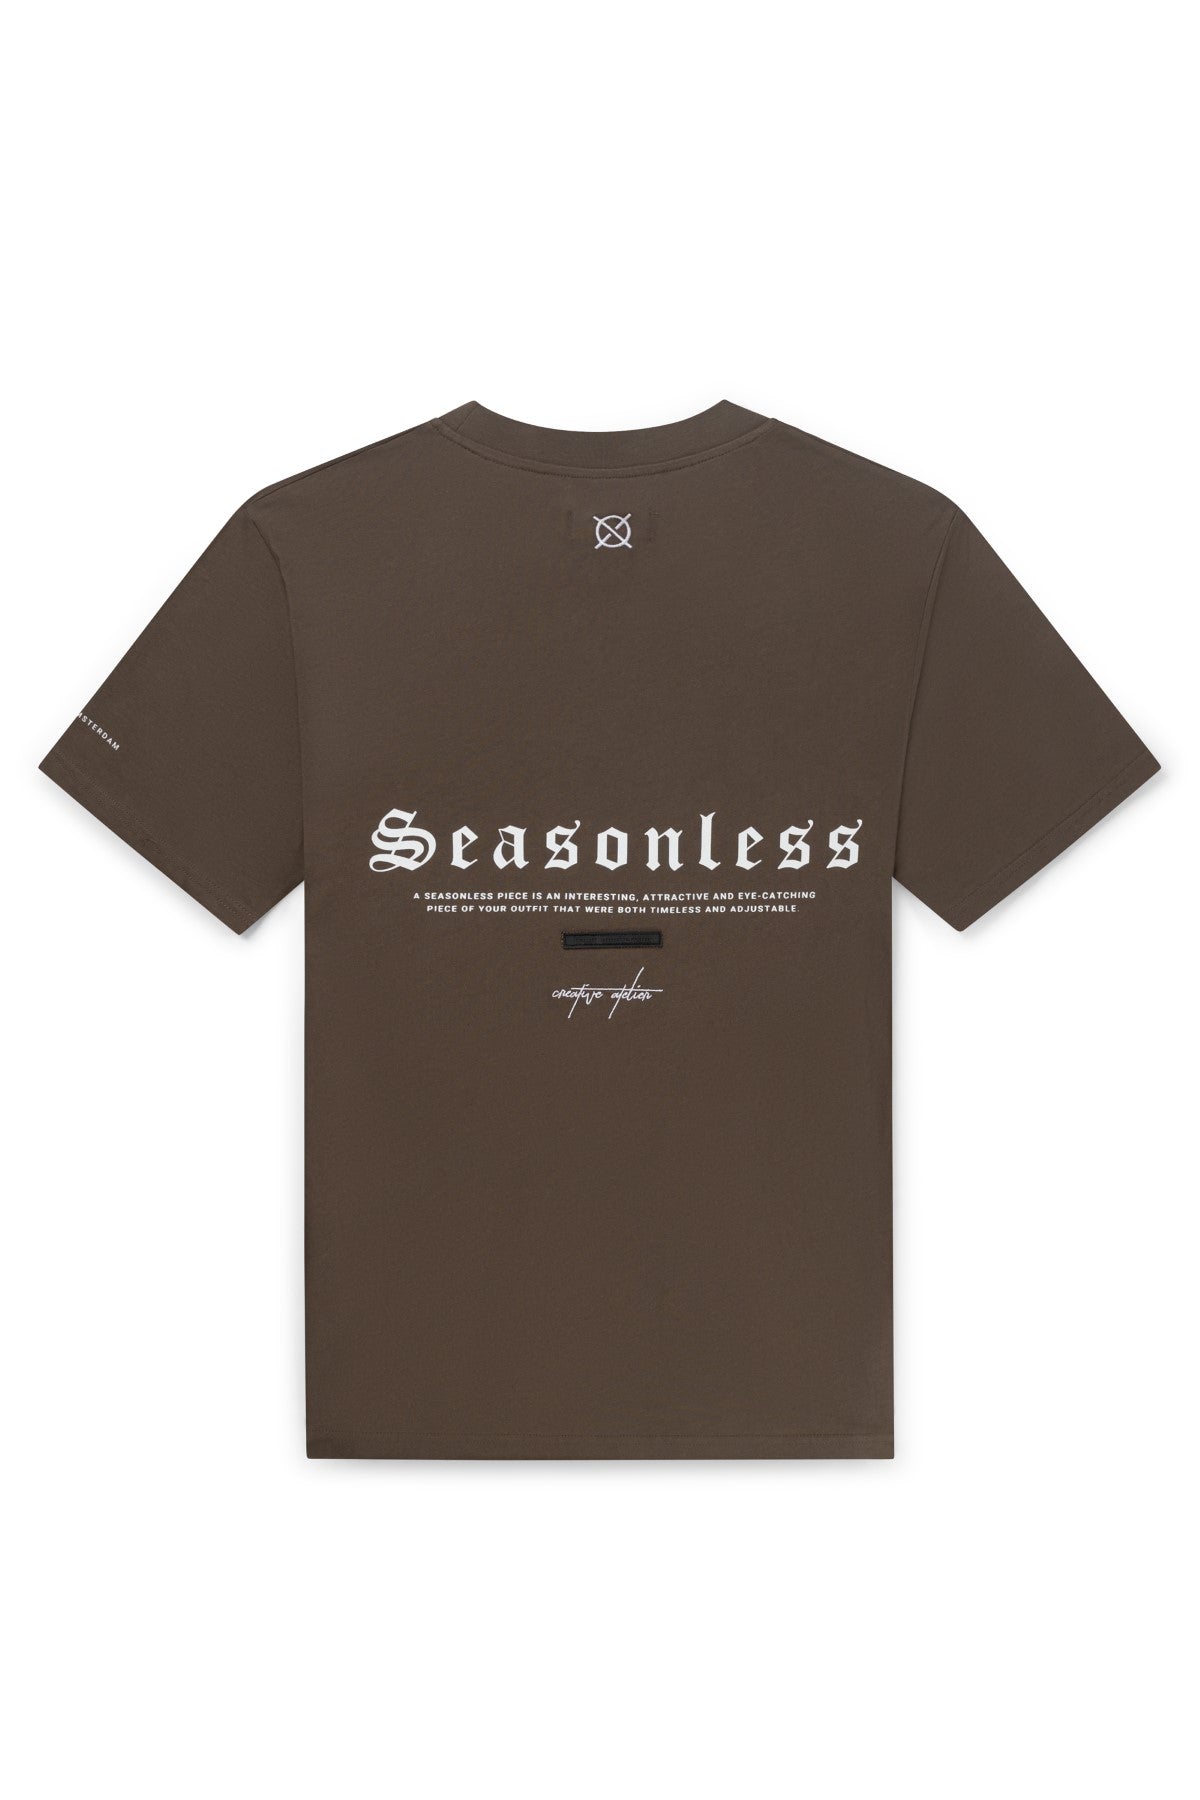 Seasonless T-Shirt - Chocolate Brown